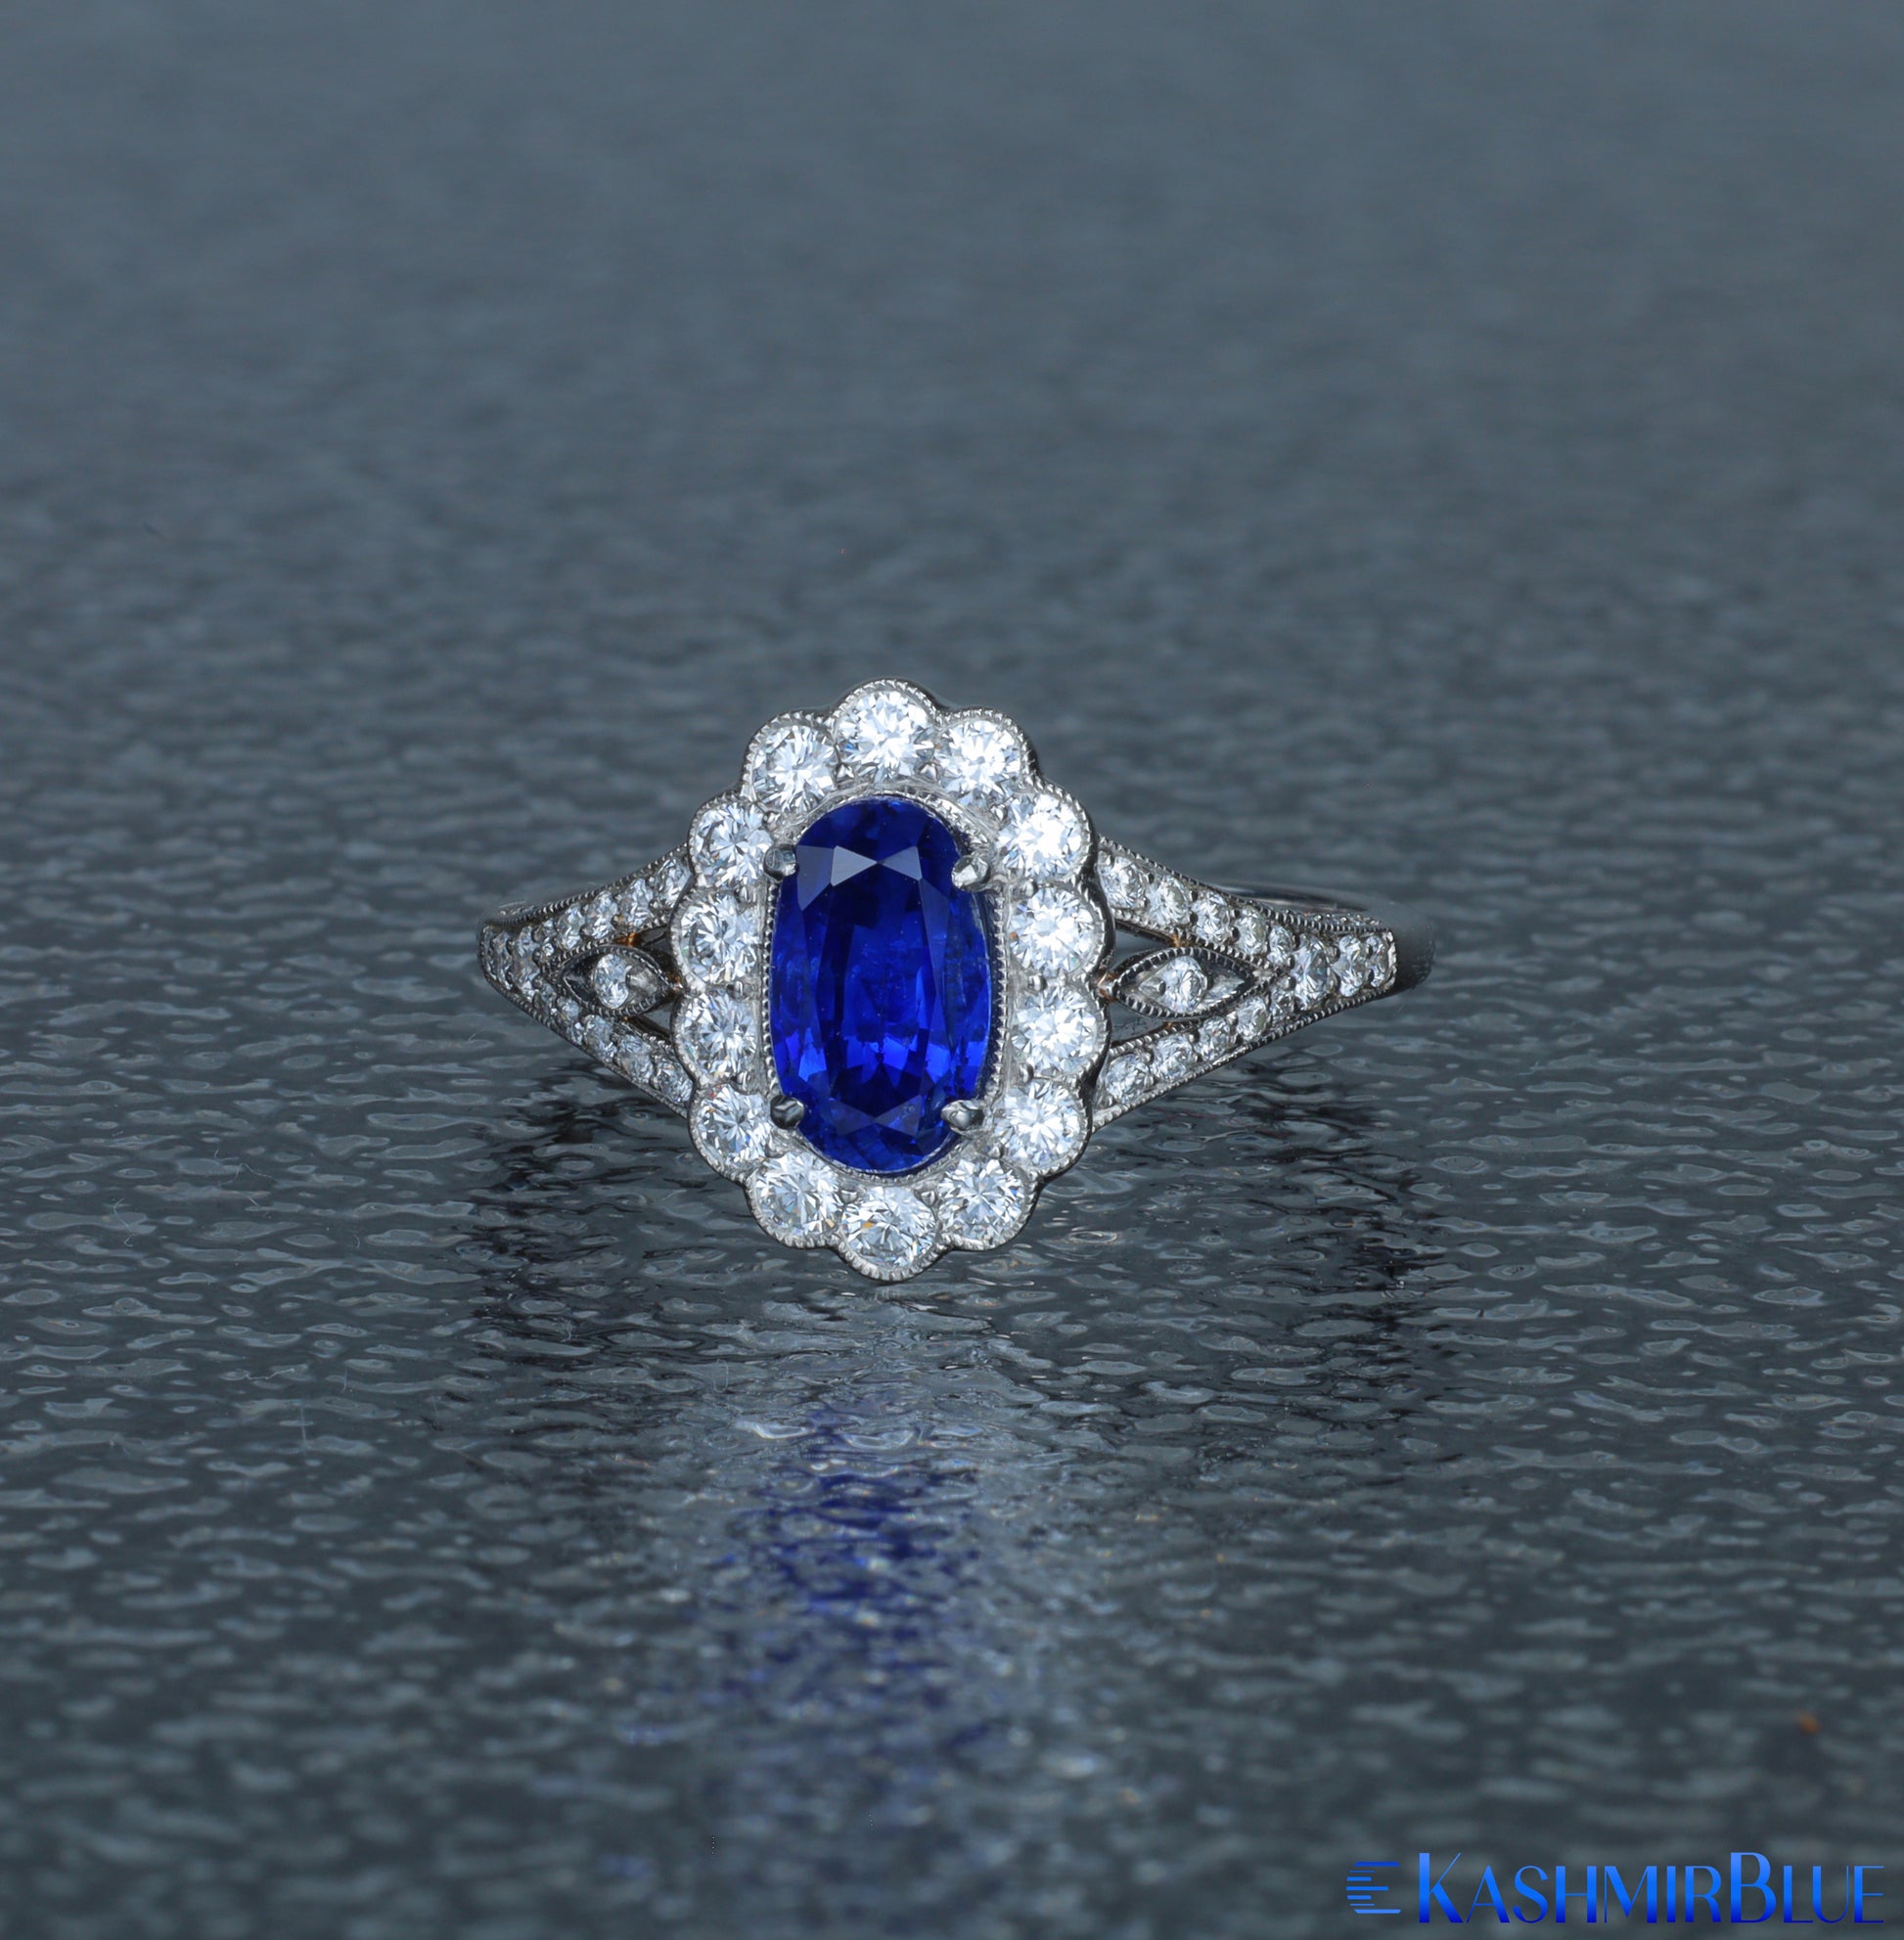 1.2ct Vivid Royal Blue Kashmir Sapphire